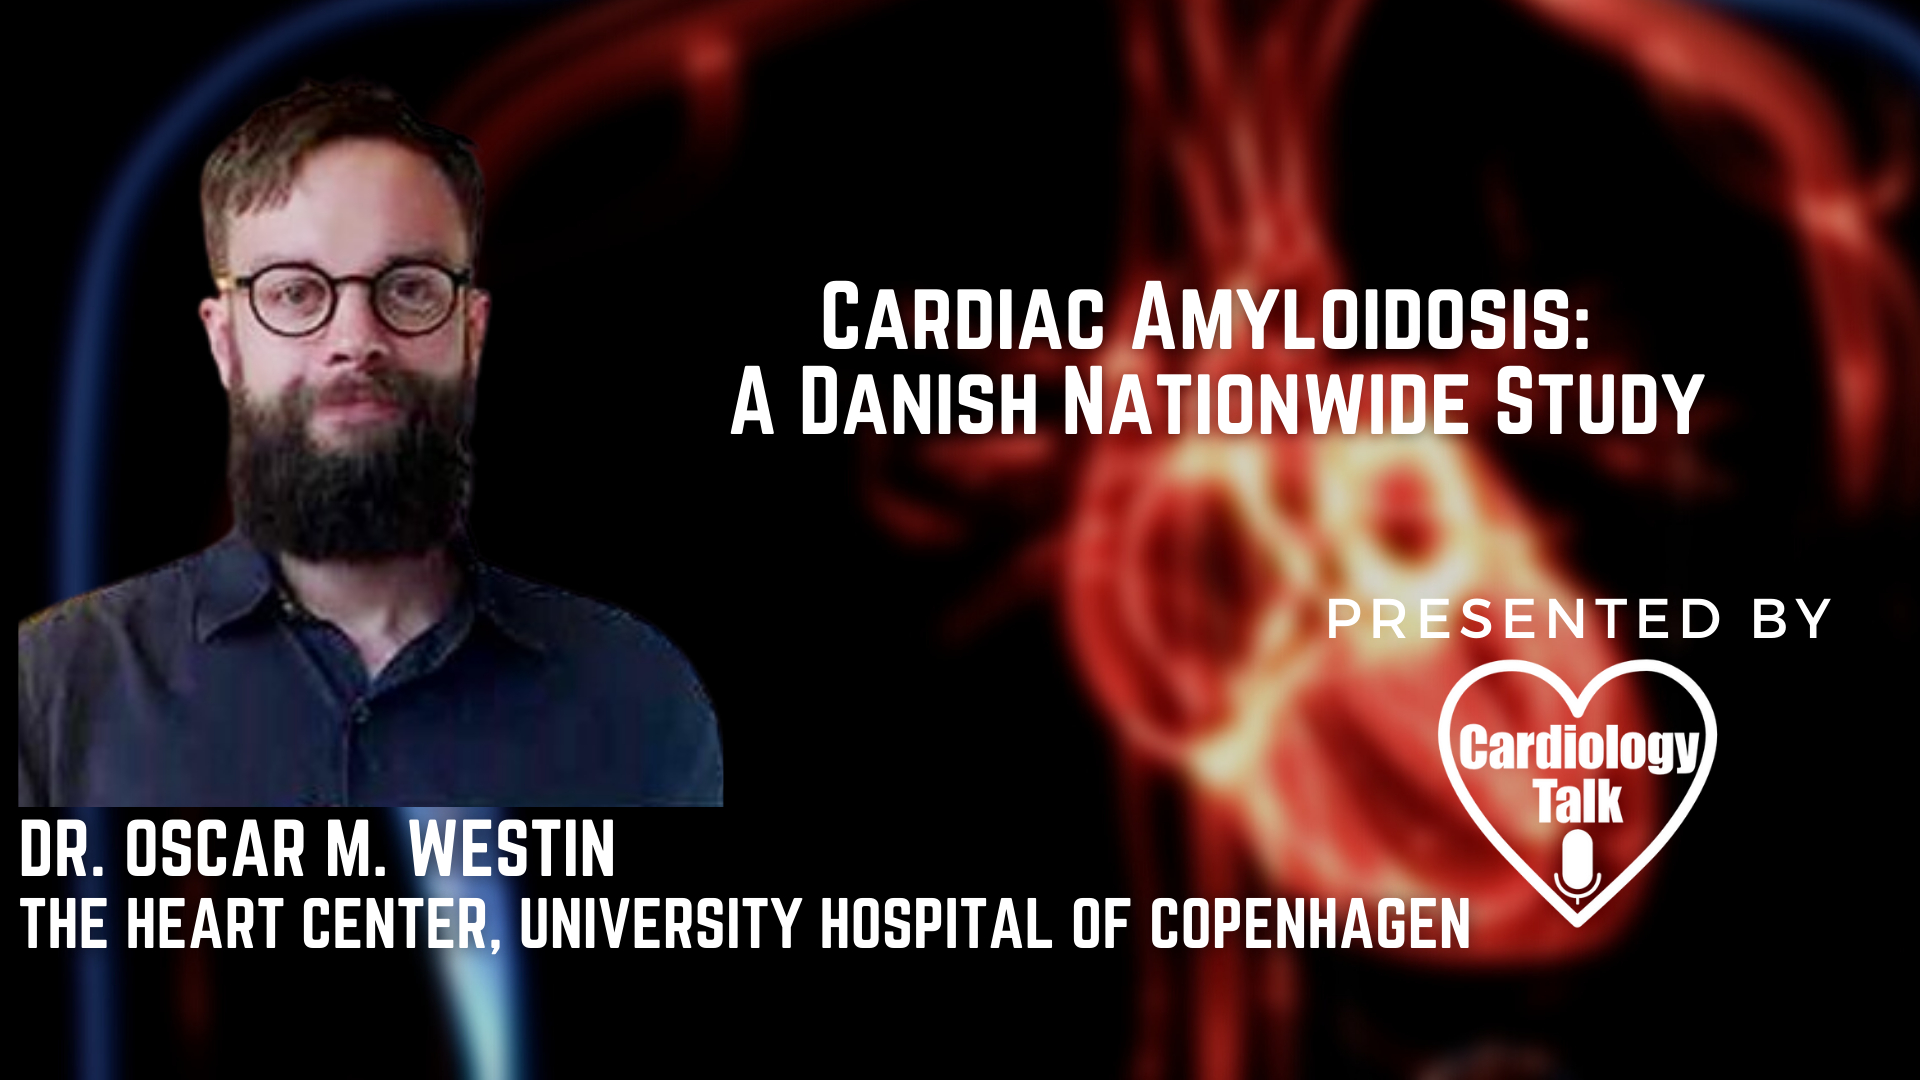 Dr. Oscar M. Westin, MD- Cardiac Amyloidosis: A Danish Nationwide Study @heartcentreCPH  @uni_copenhagen @DCAcademyDK #DanishNationwideStudy #Amyloidosis #Cardiology #Research